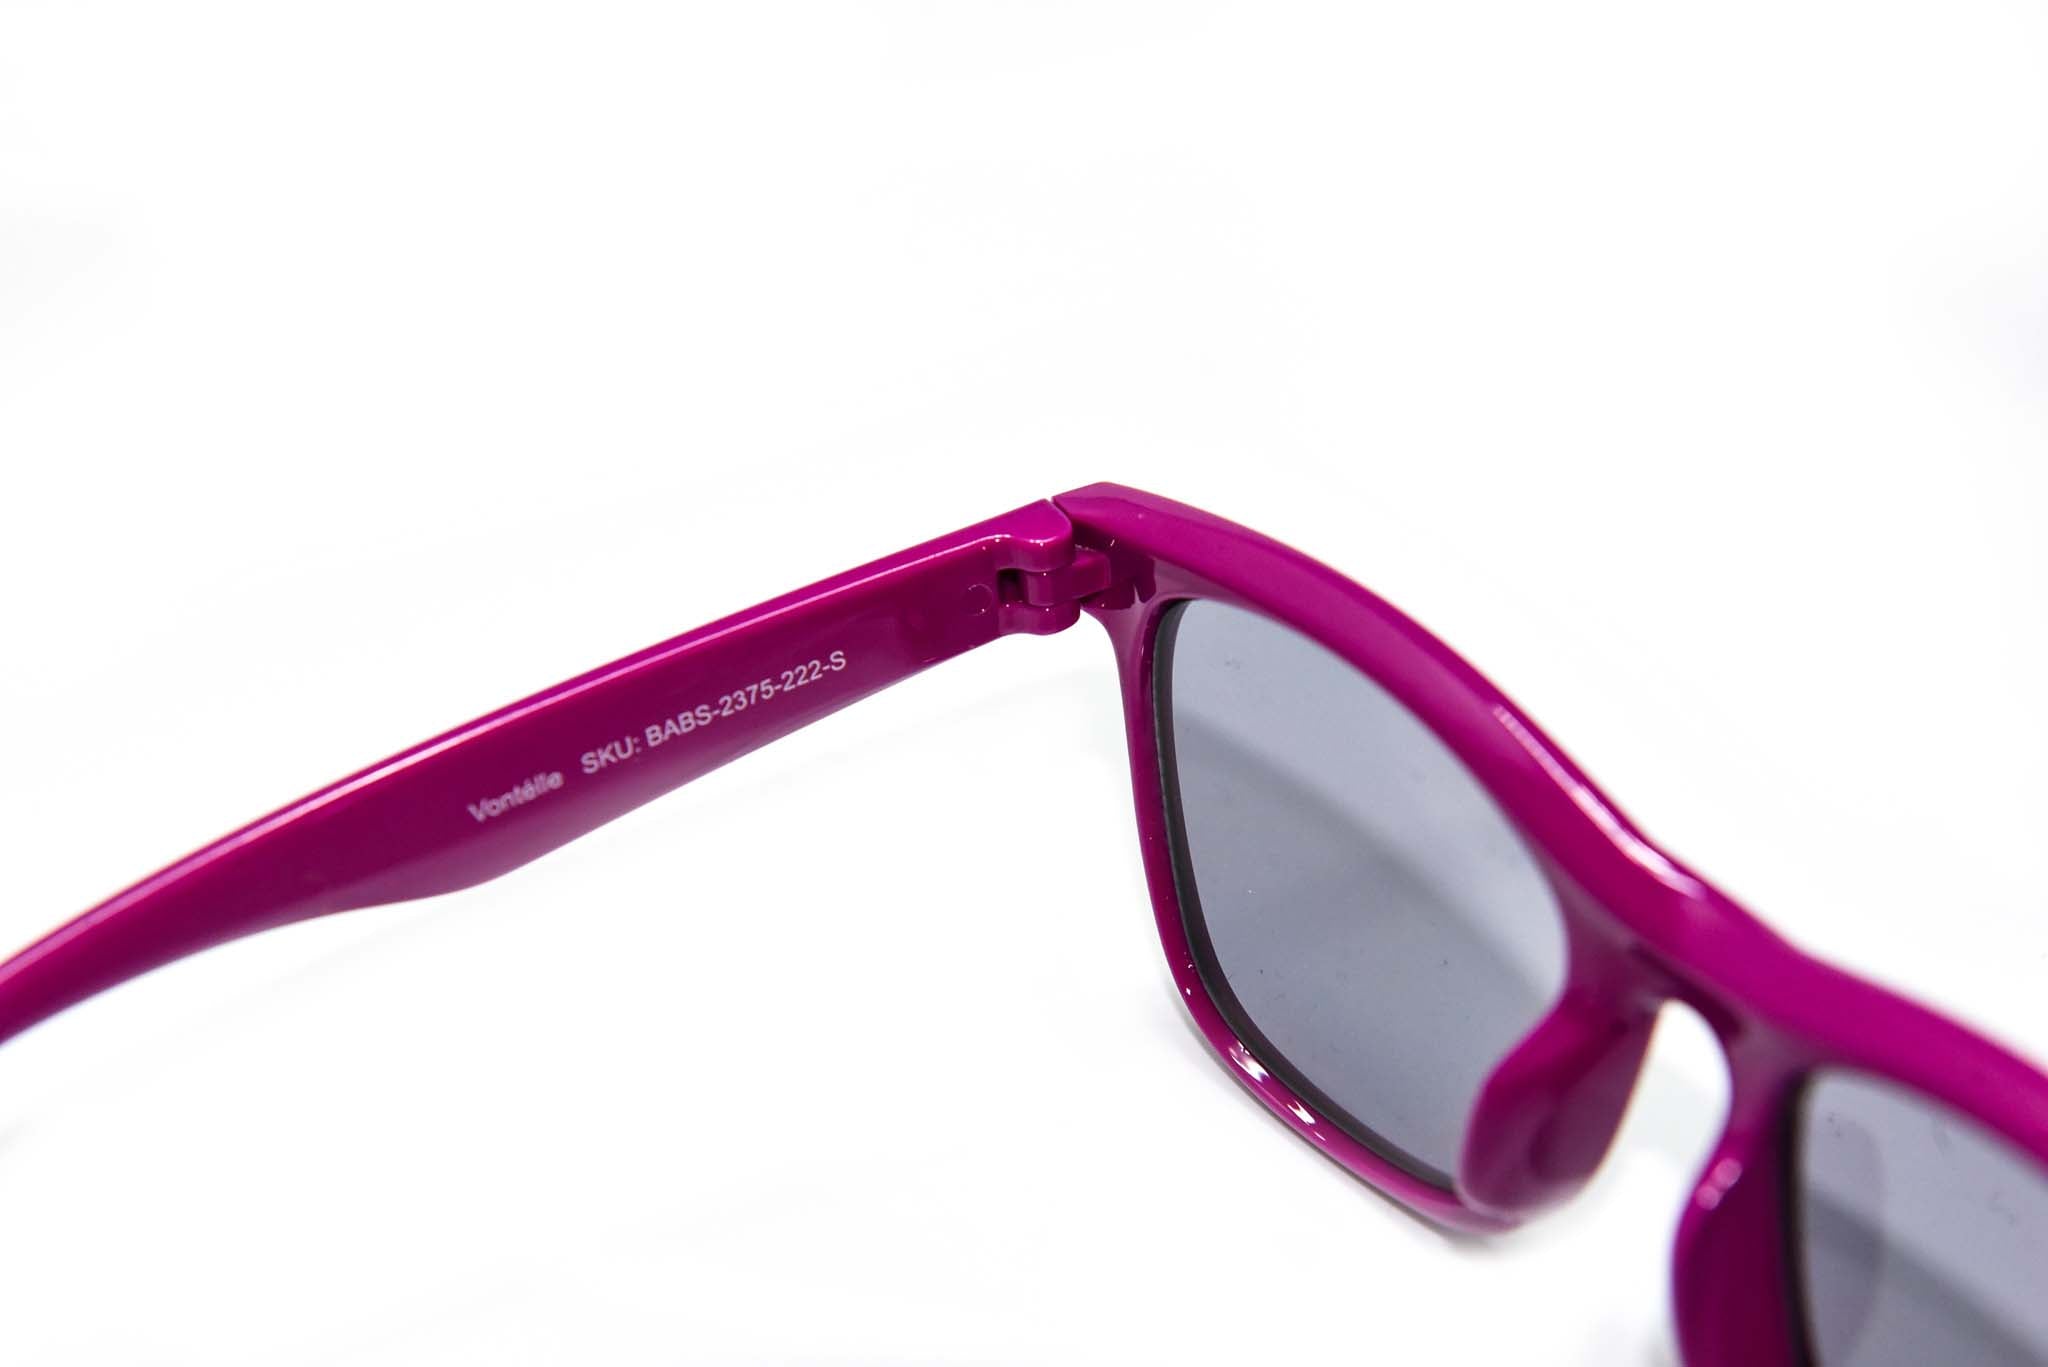 Baby Shark Pink Sunglasses